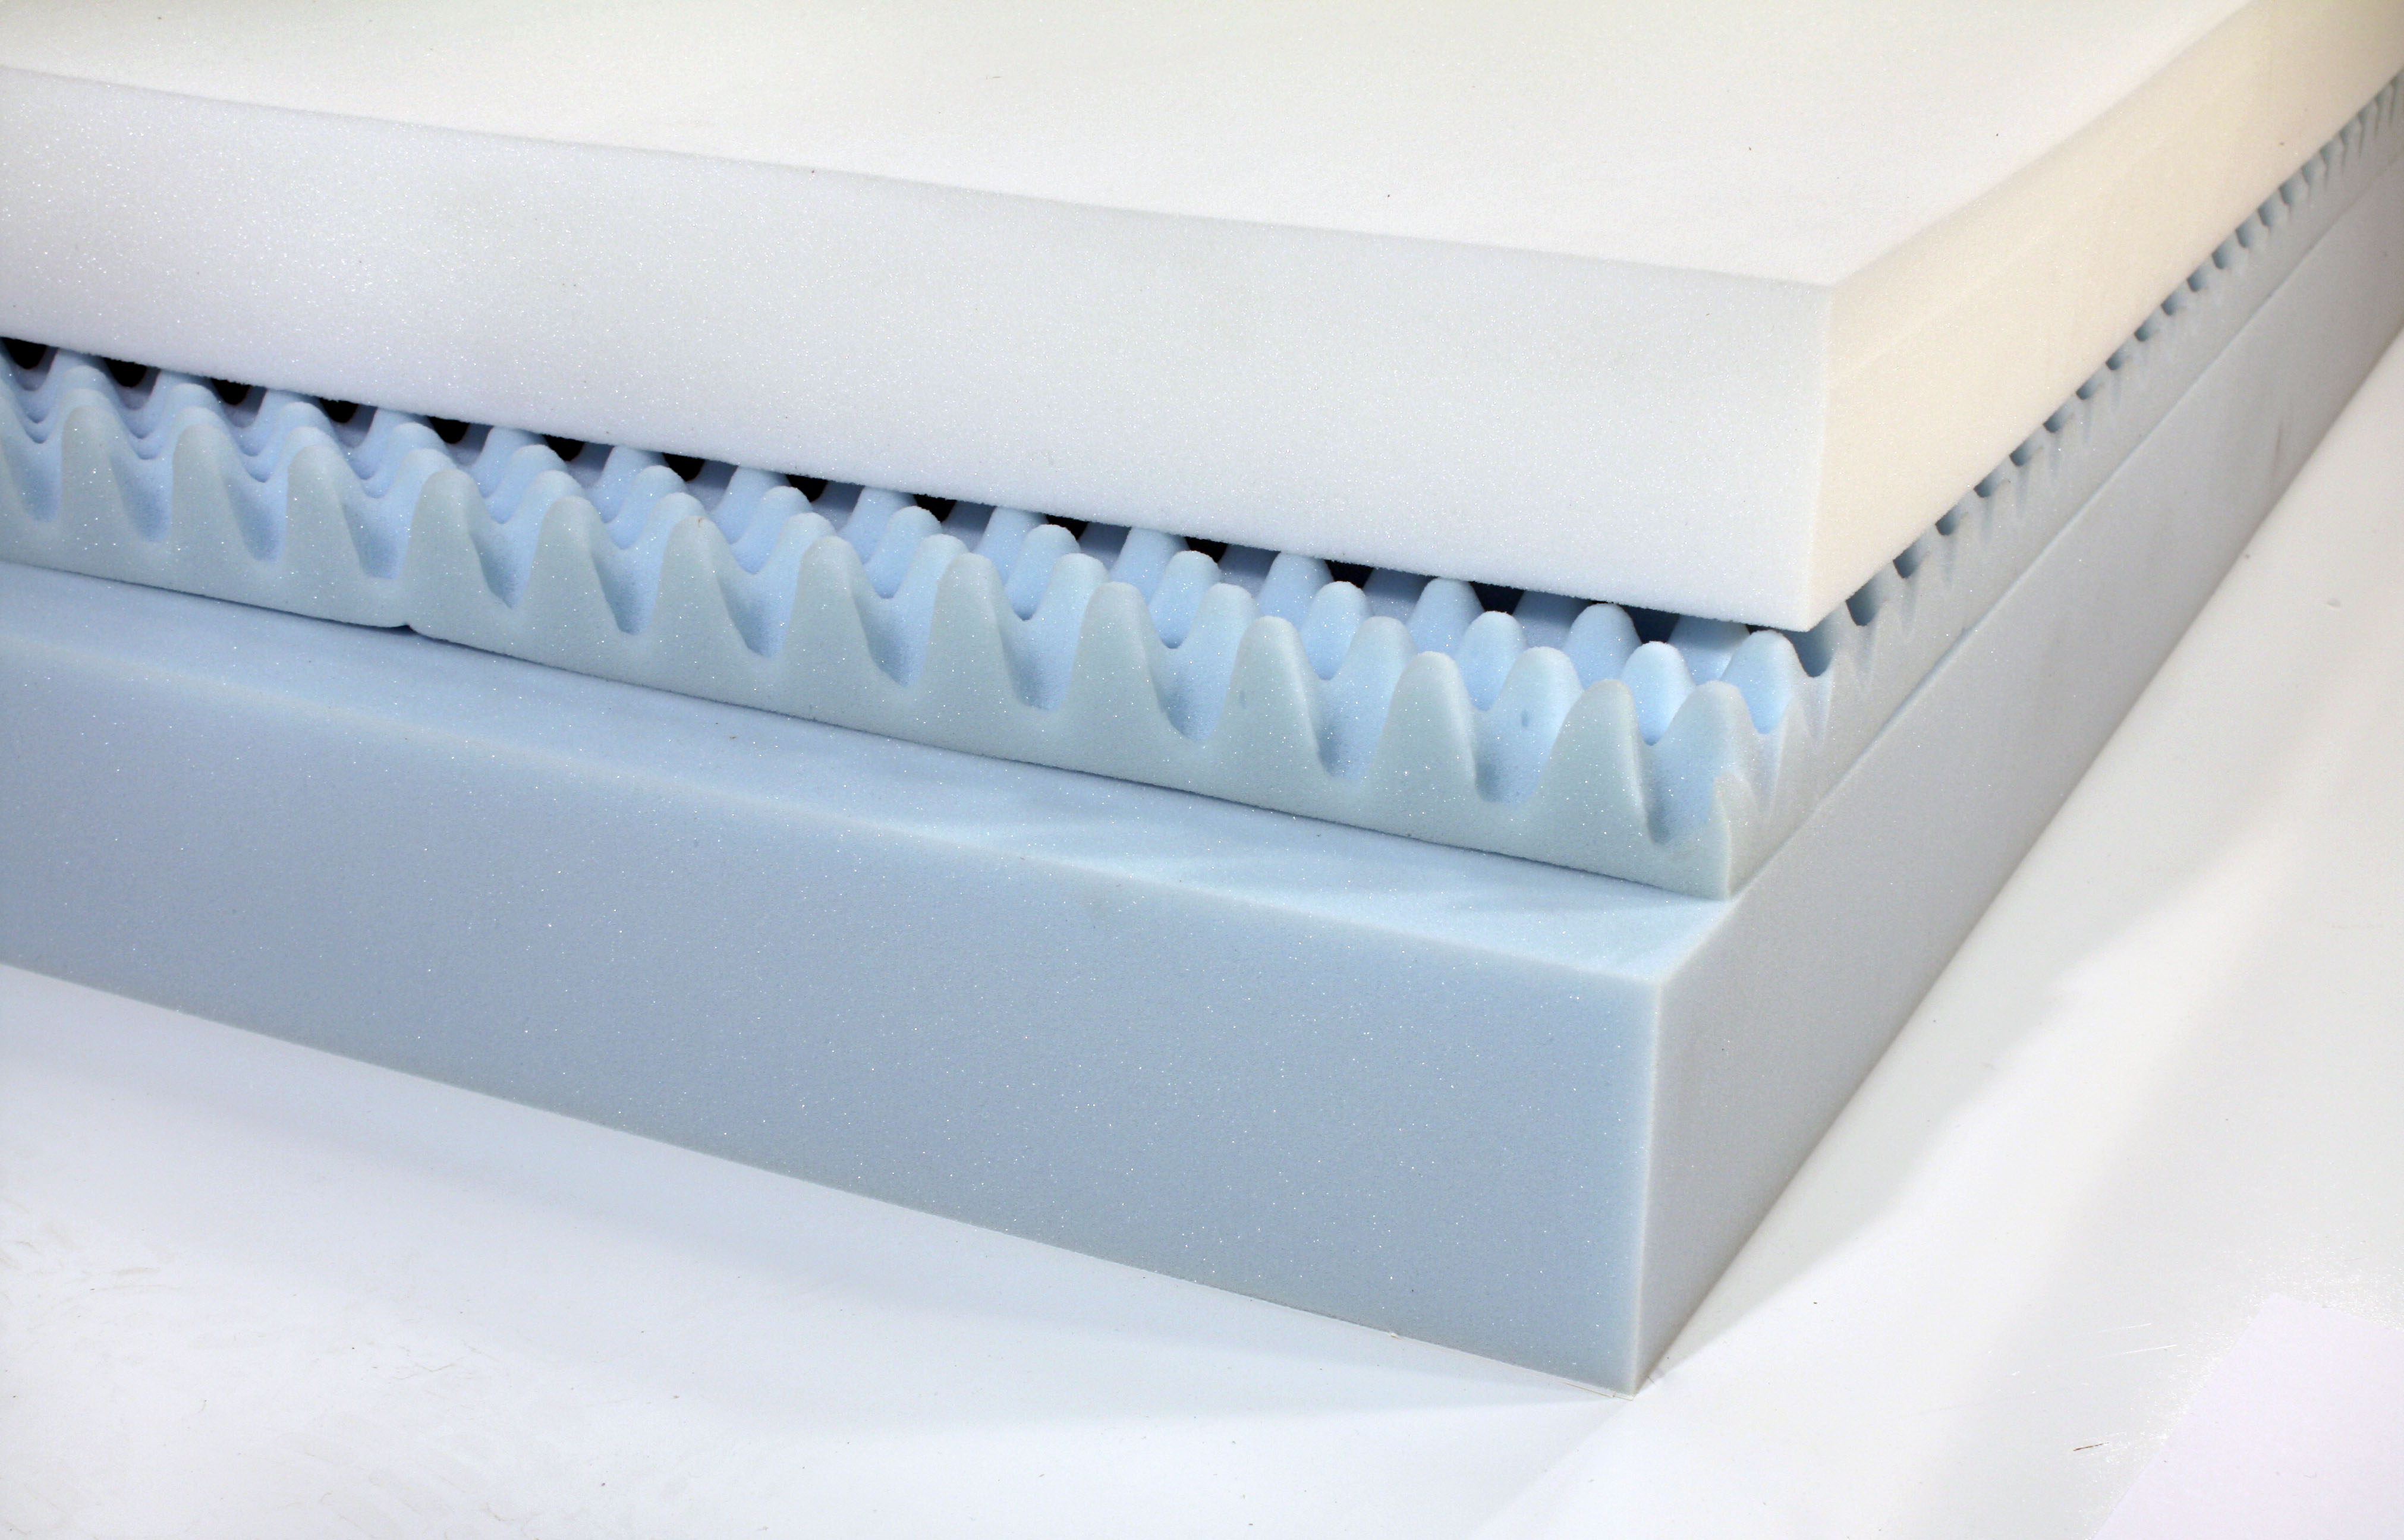 custom home memory foam mattress